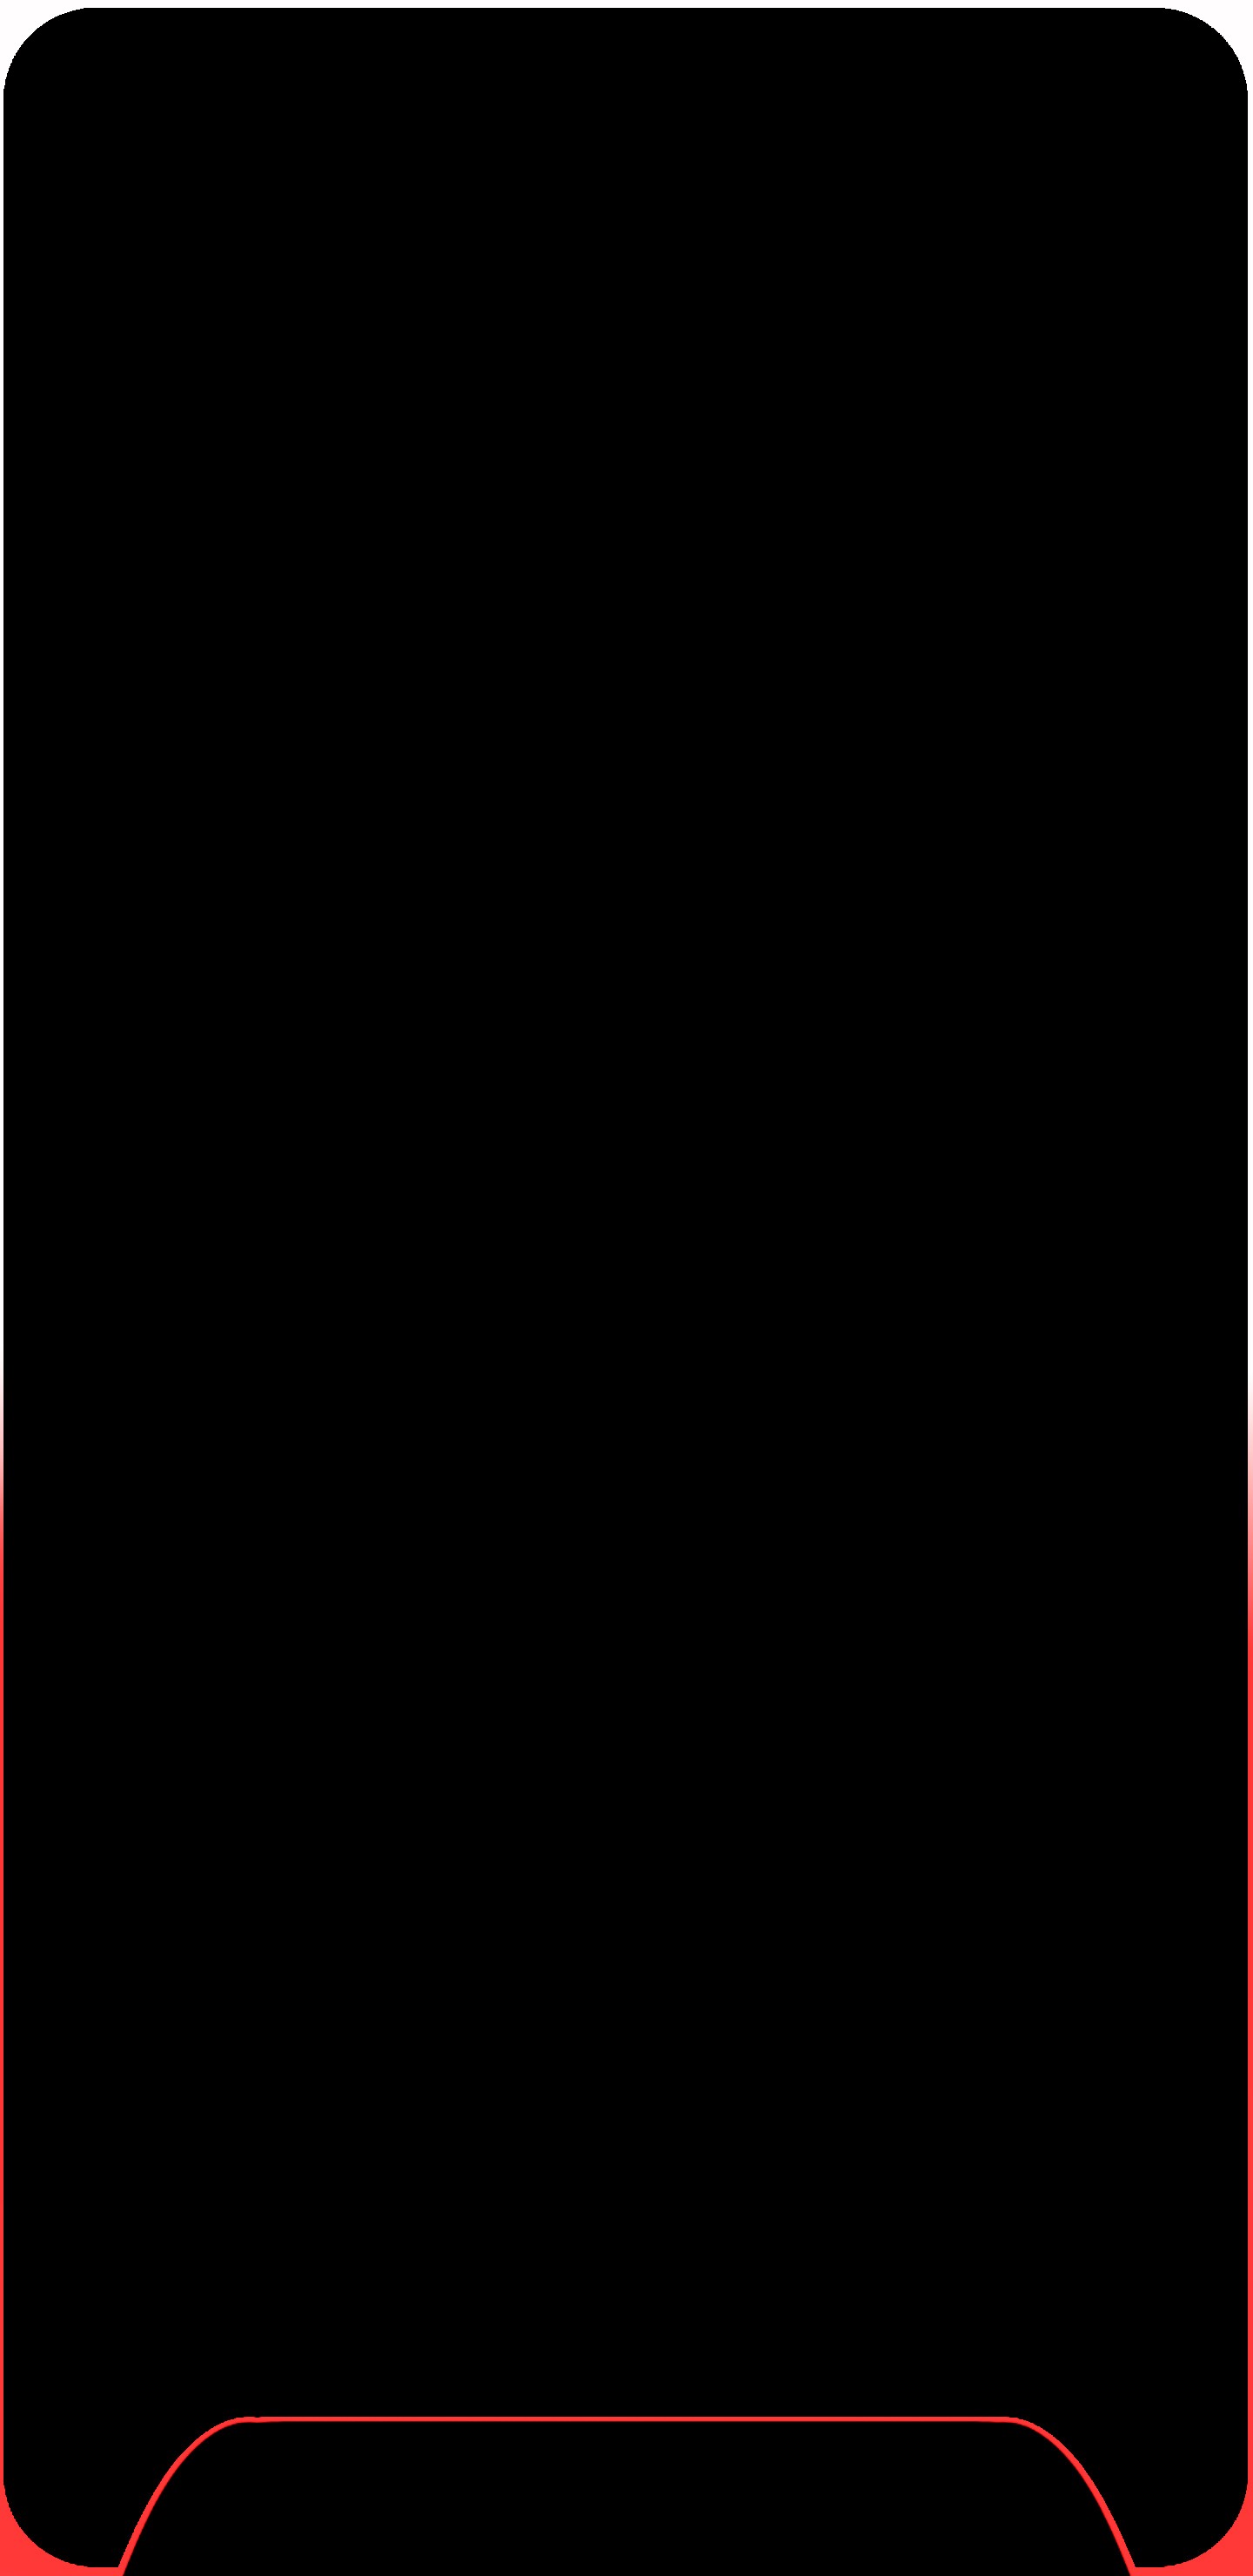 galaxy s8 wallpaper,black,red,text,brown,darkness